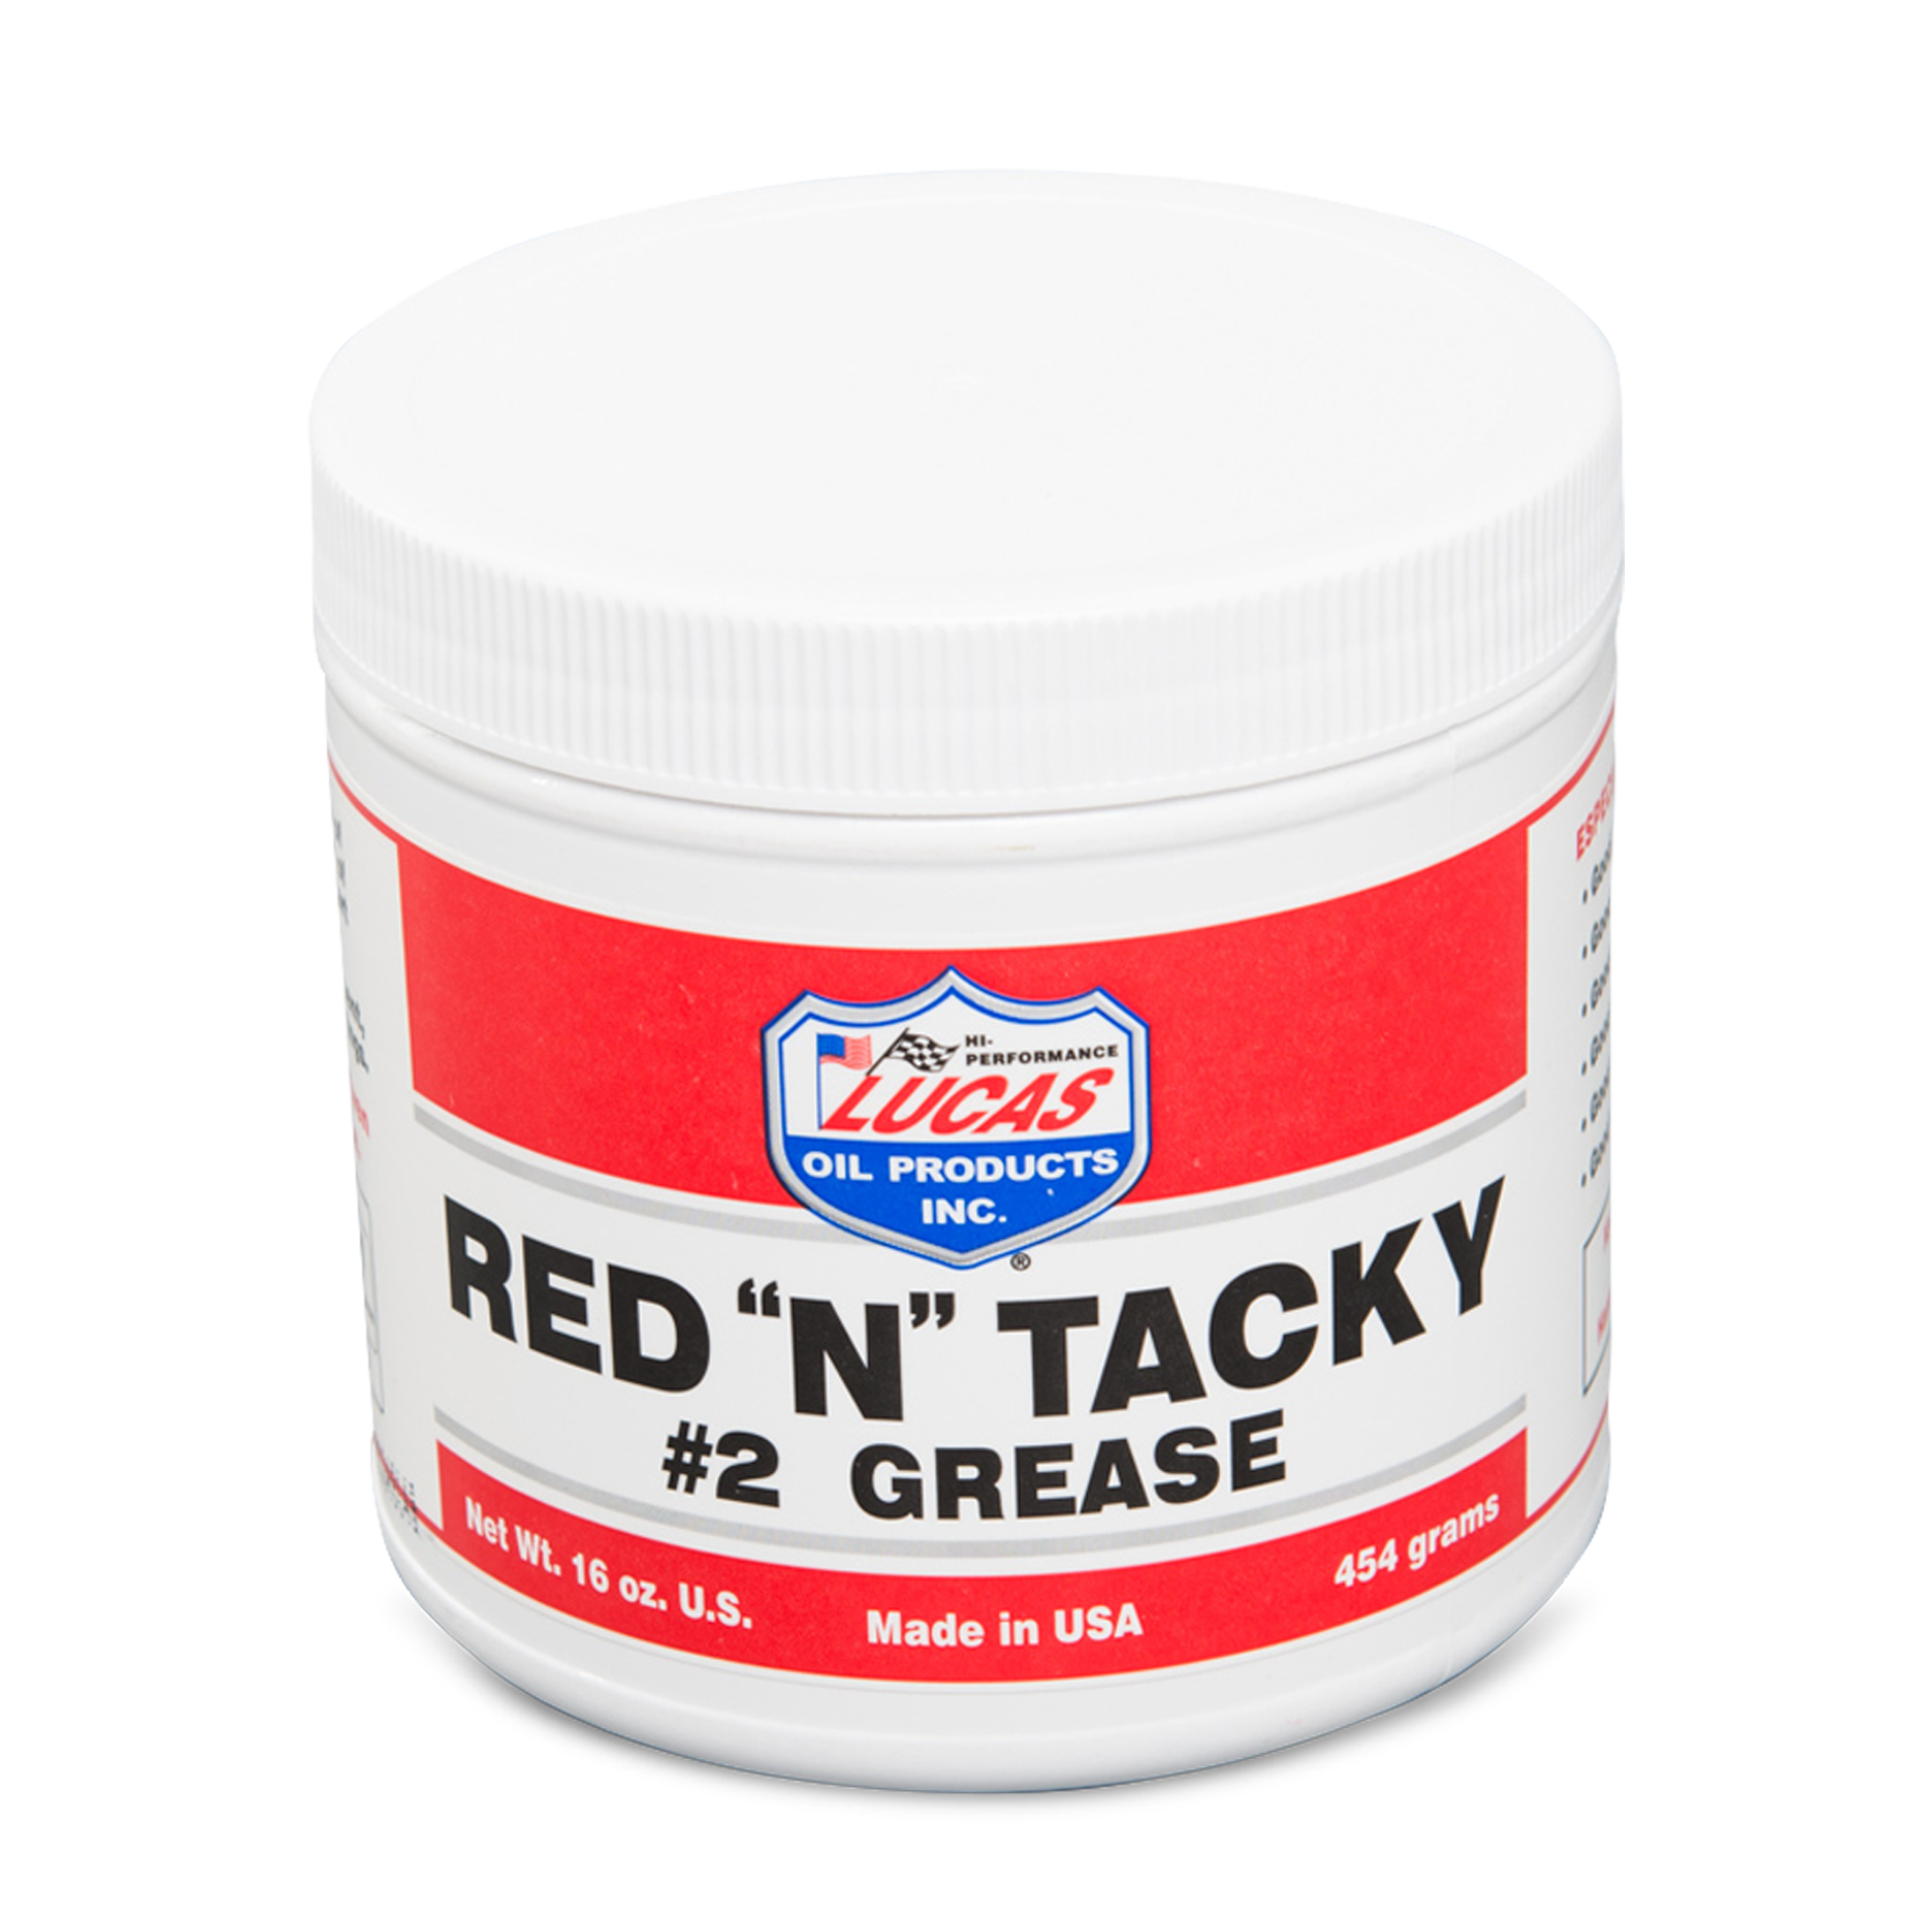 Red N Tacky Grease